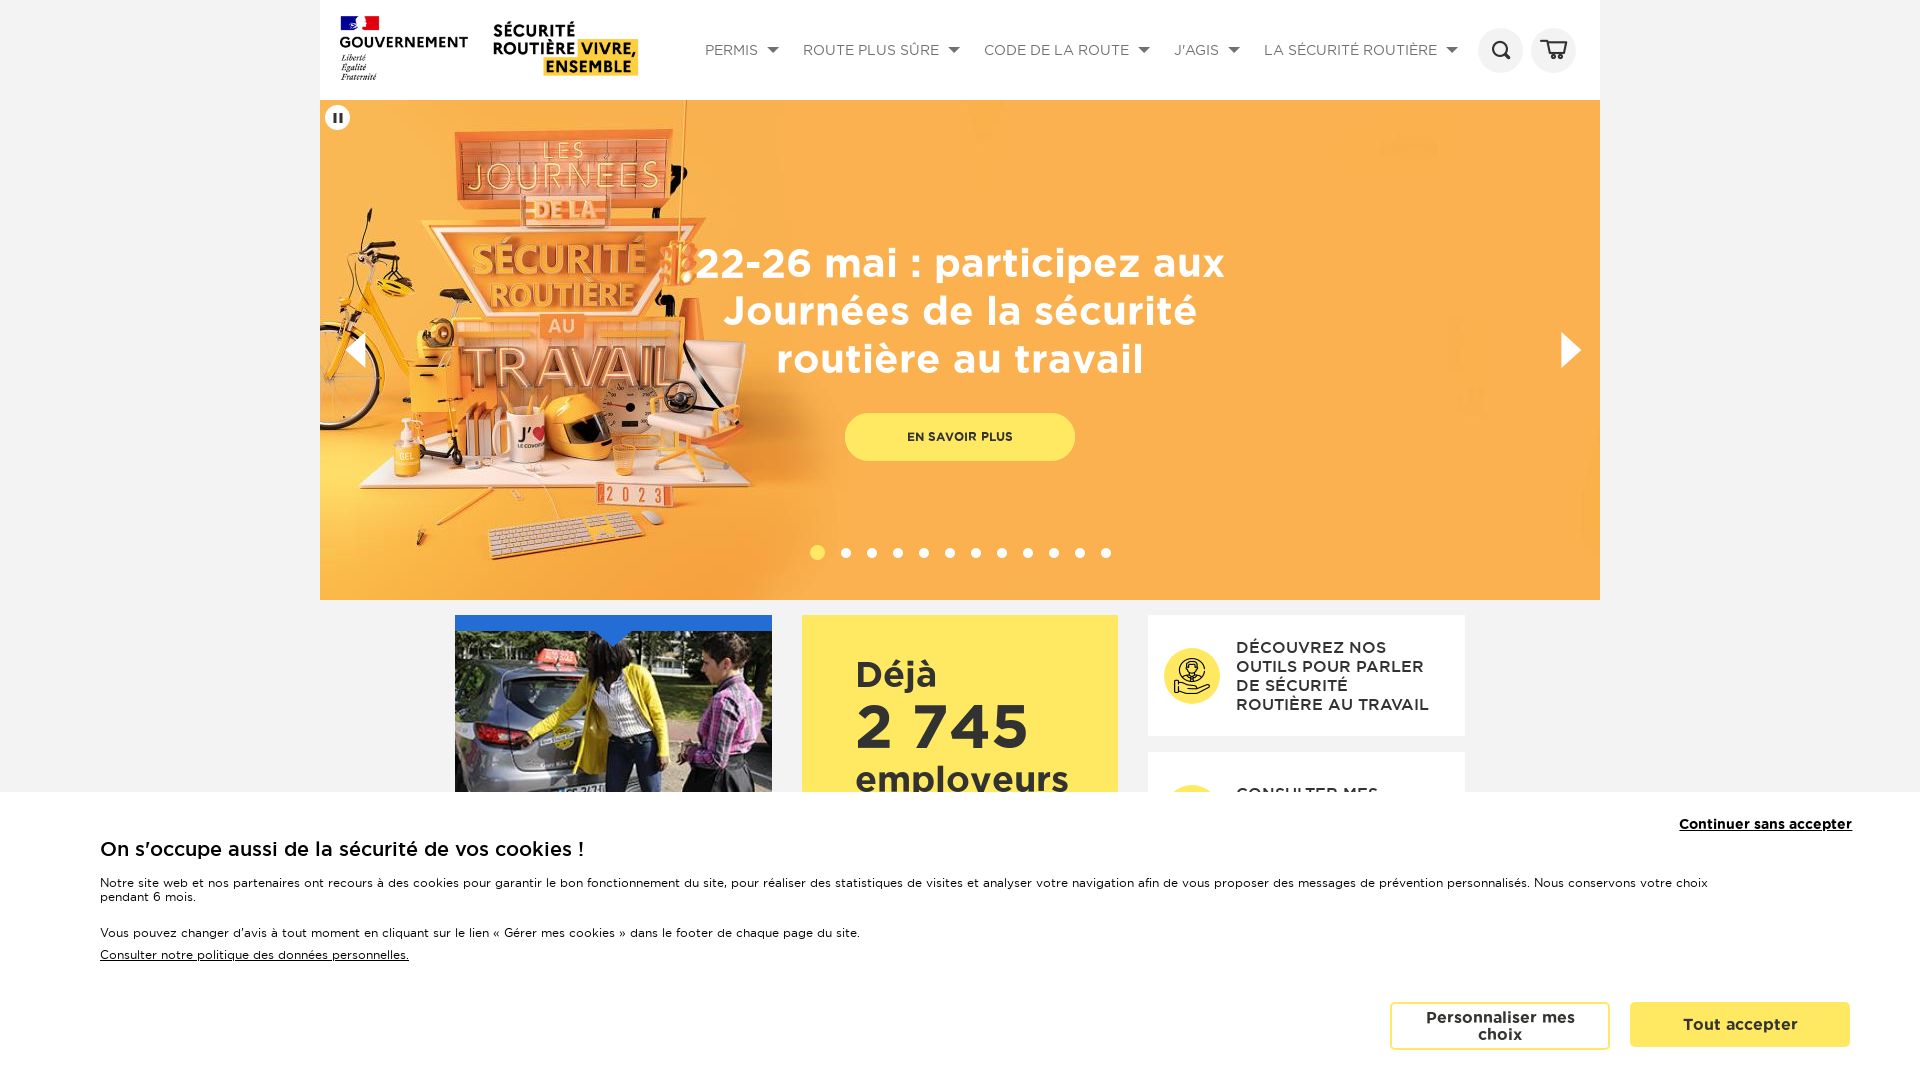 Website status www.securite-routiere.gouv.fr is   ONLINE